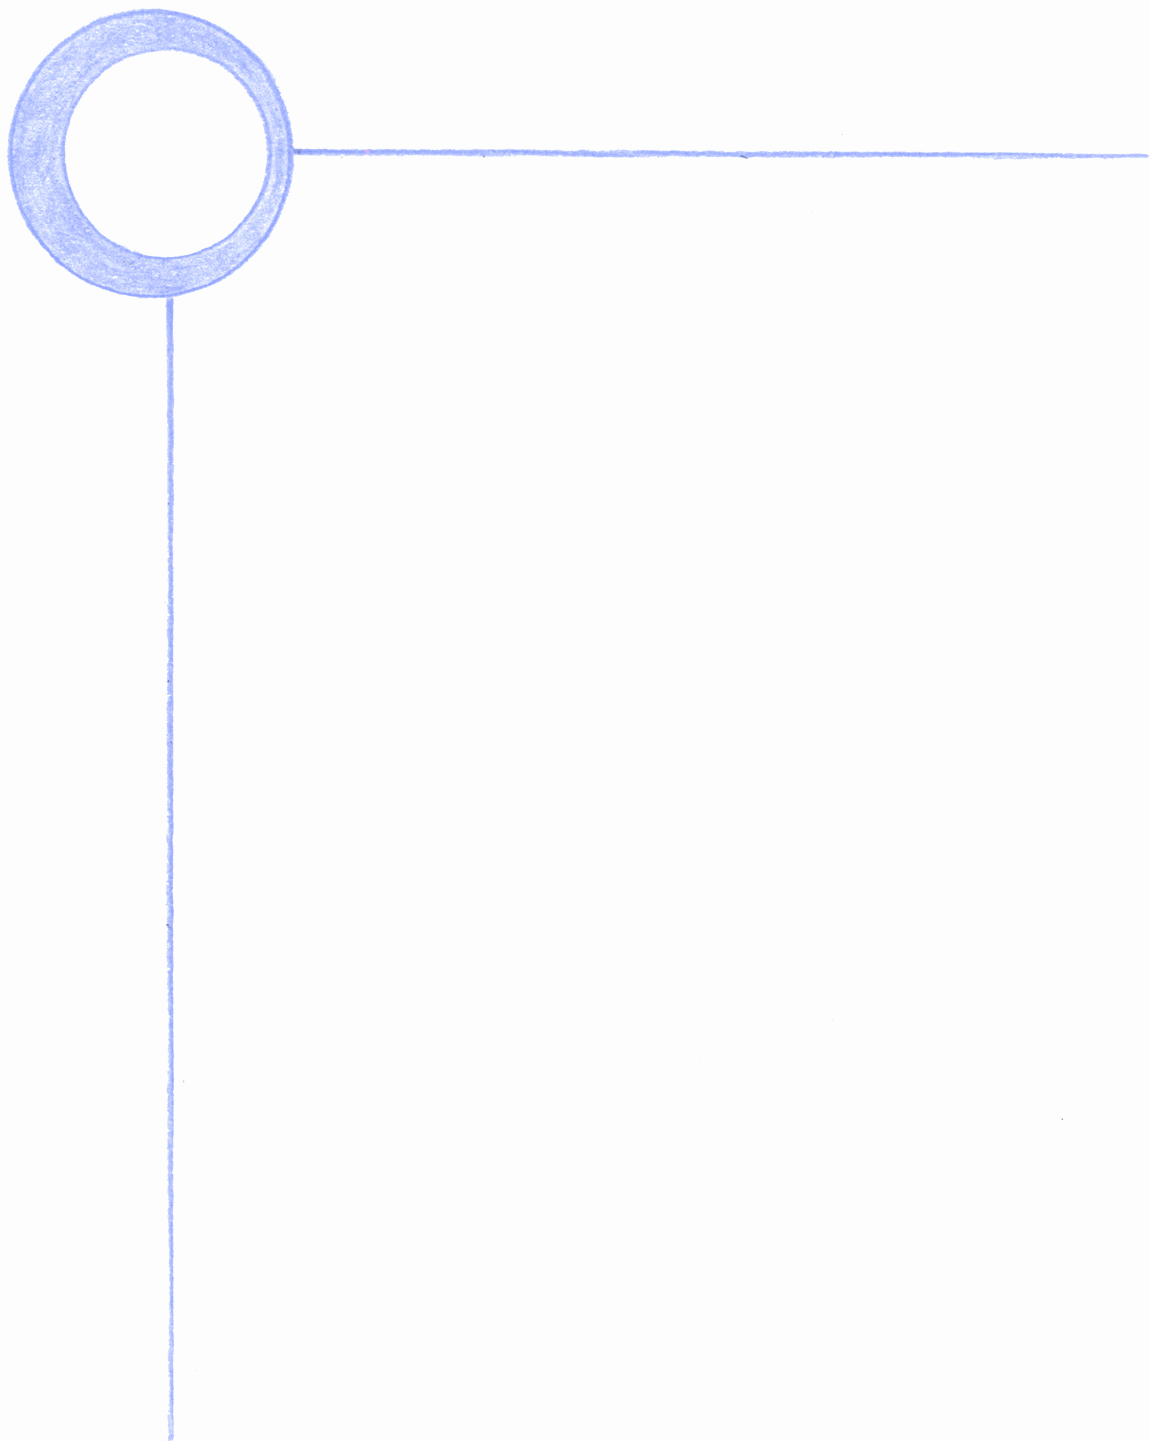 Borders / Frame Clip Art - All Free Original Clip Art